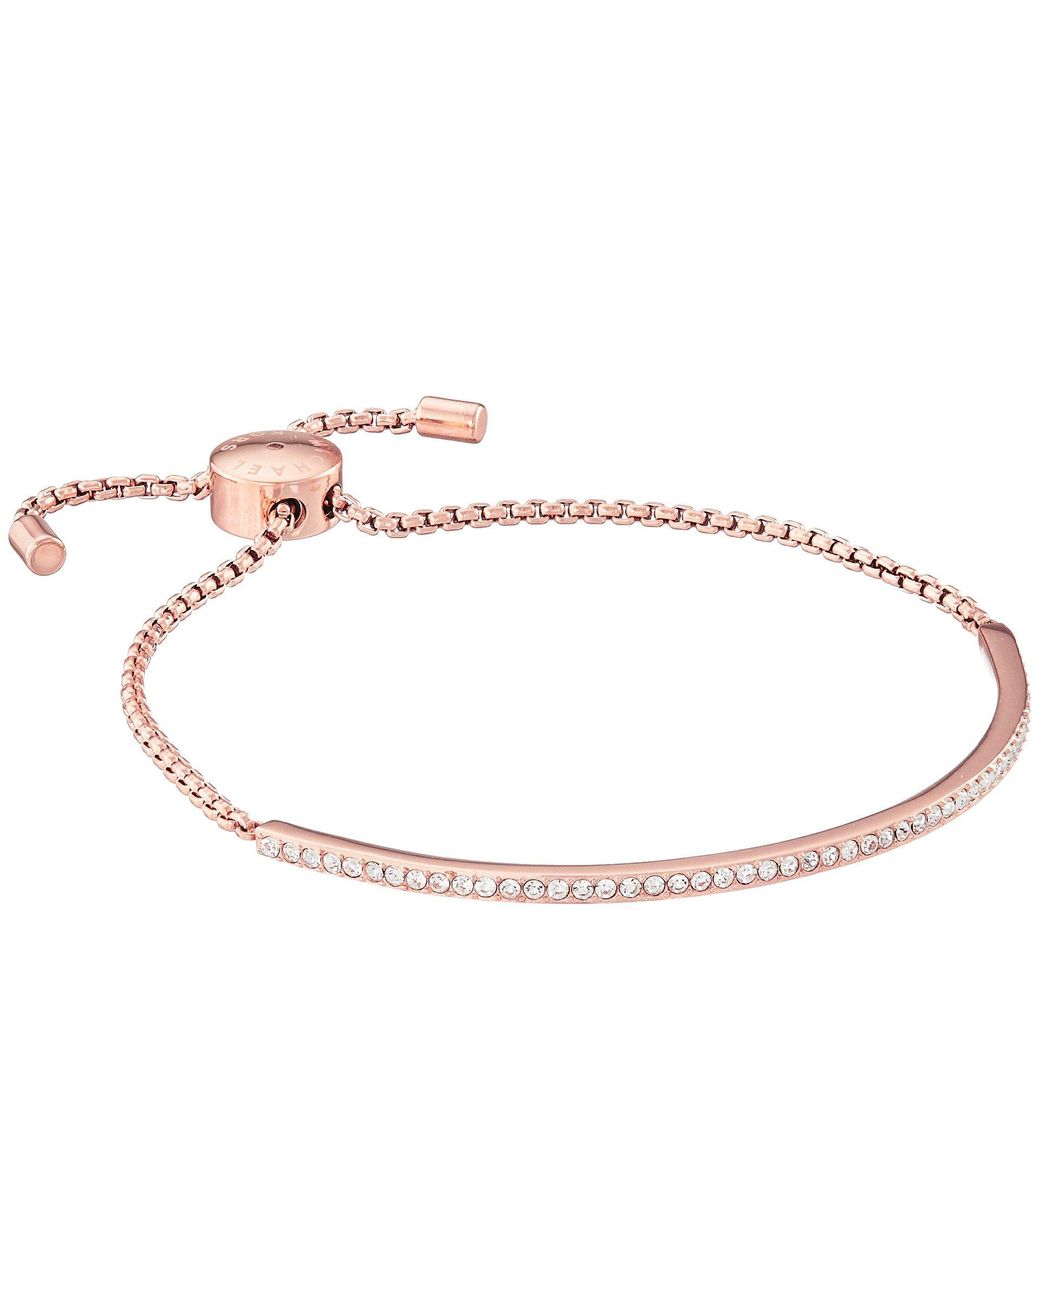 Michael Kors Rose GoldTone Stainless Steel Bracelet  DANYOUNGUK